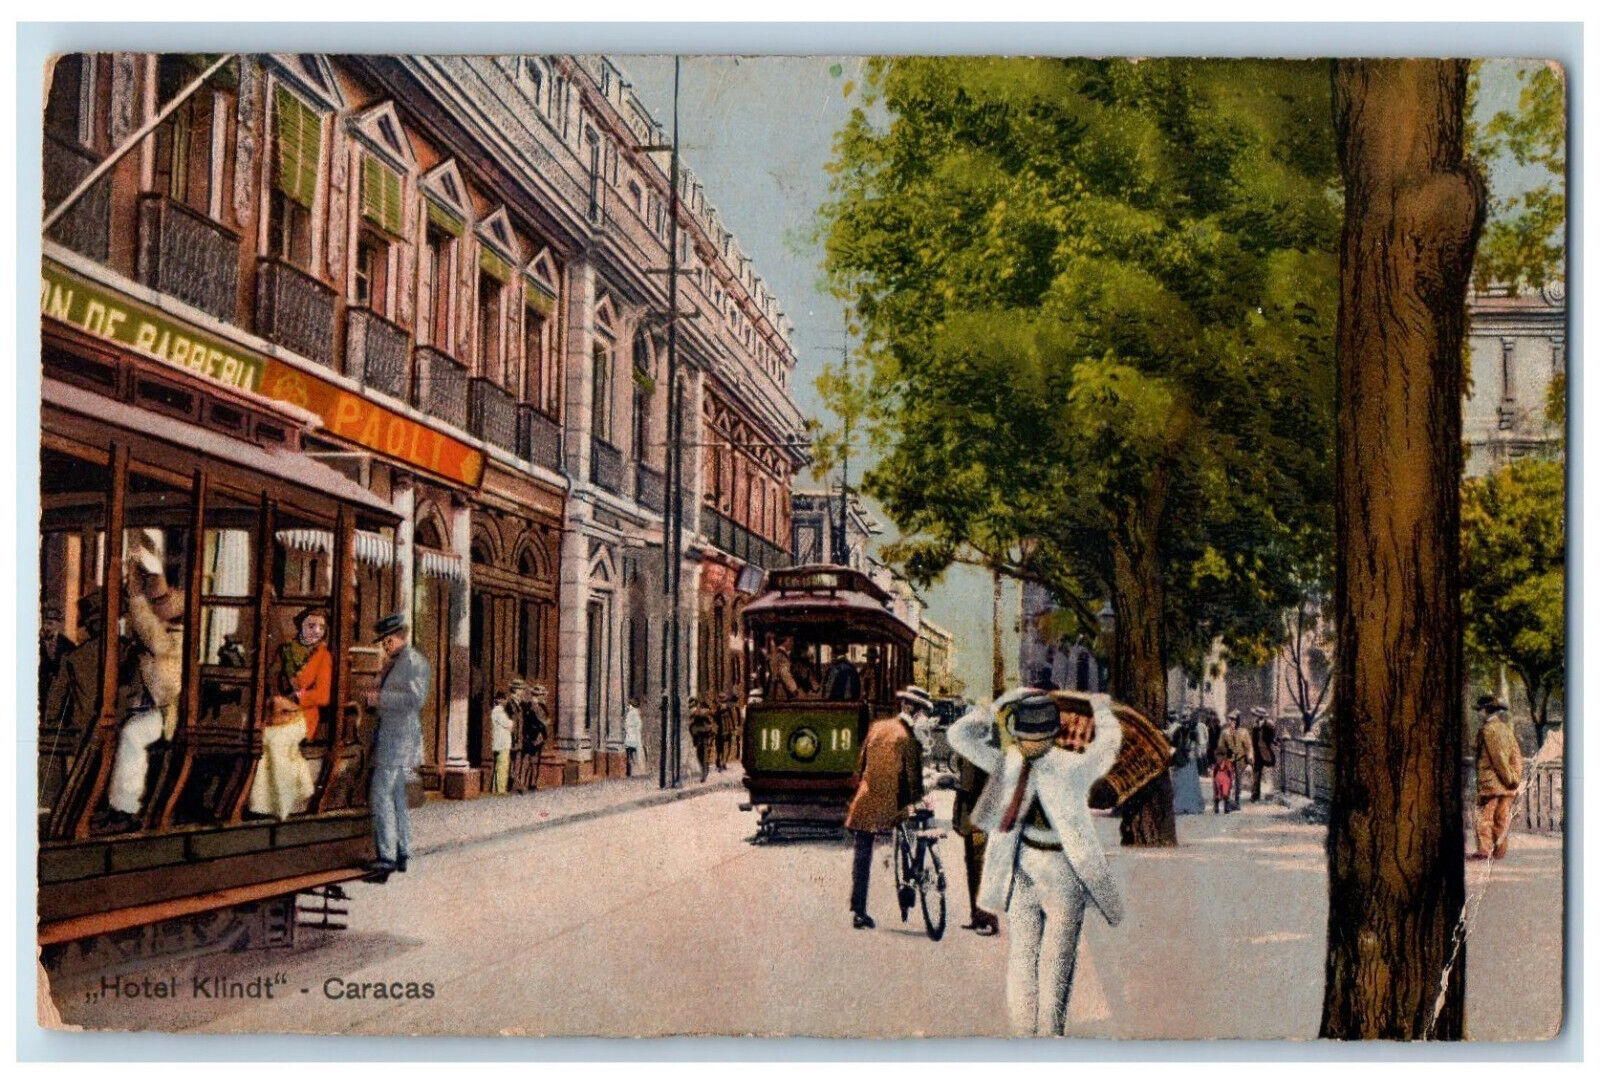 c1910 Barbershop Paoli Trolley Car Hotel Klindt - Caracas Venezuela Postcard